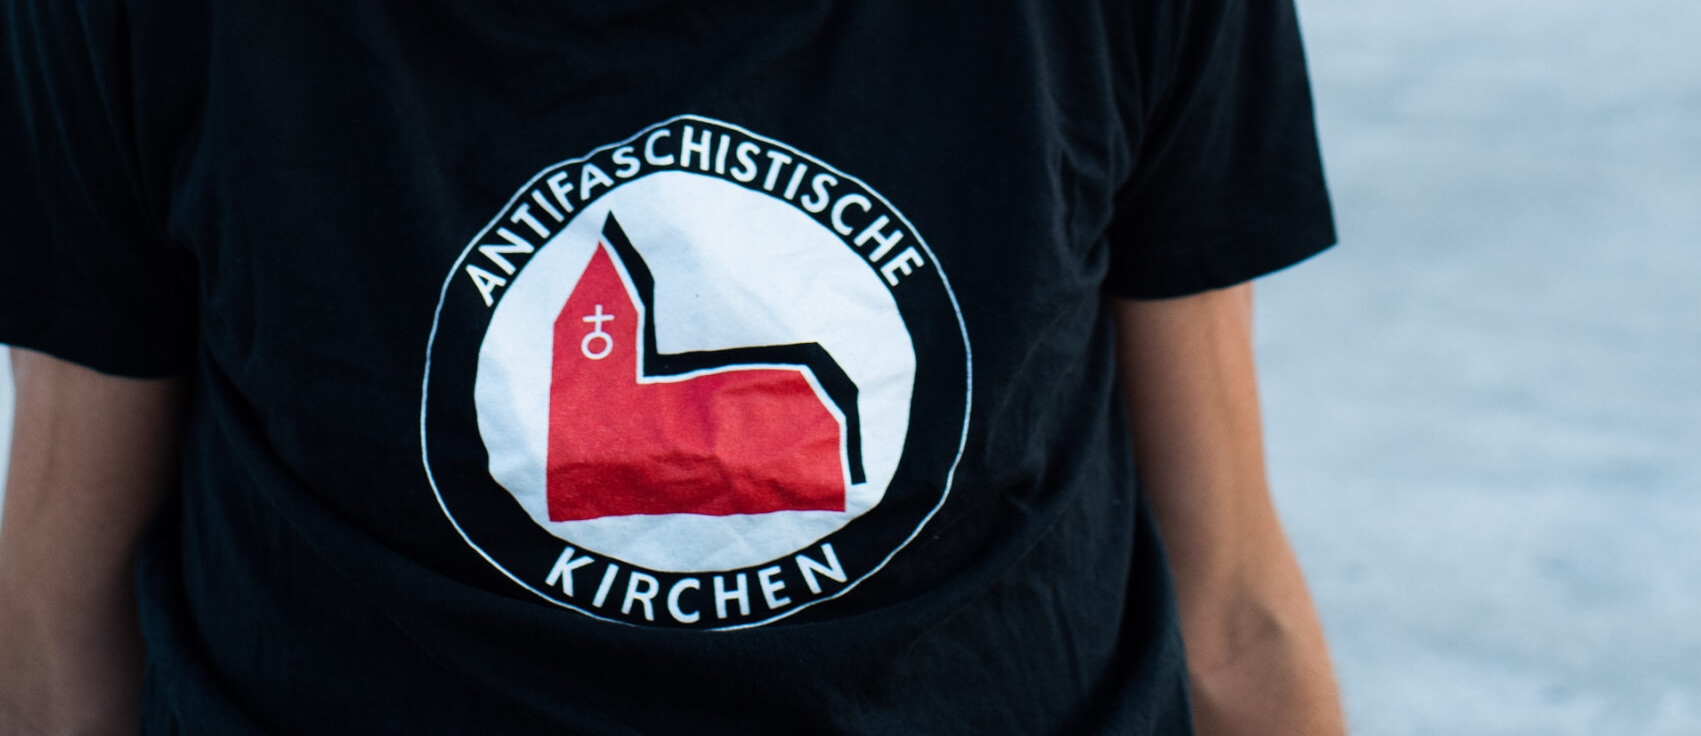 Le logo des "Eglises anti-faschistes" reprend le graphisme des Antifa  |  ©  Chris Grodotzki / sea-watch.org